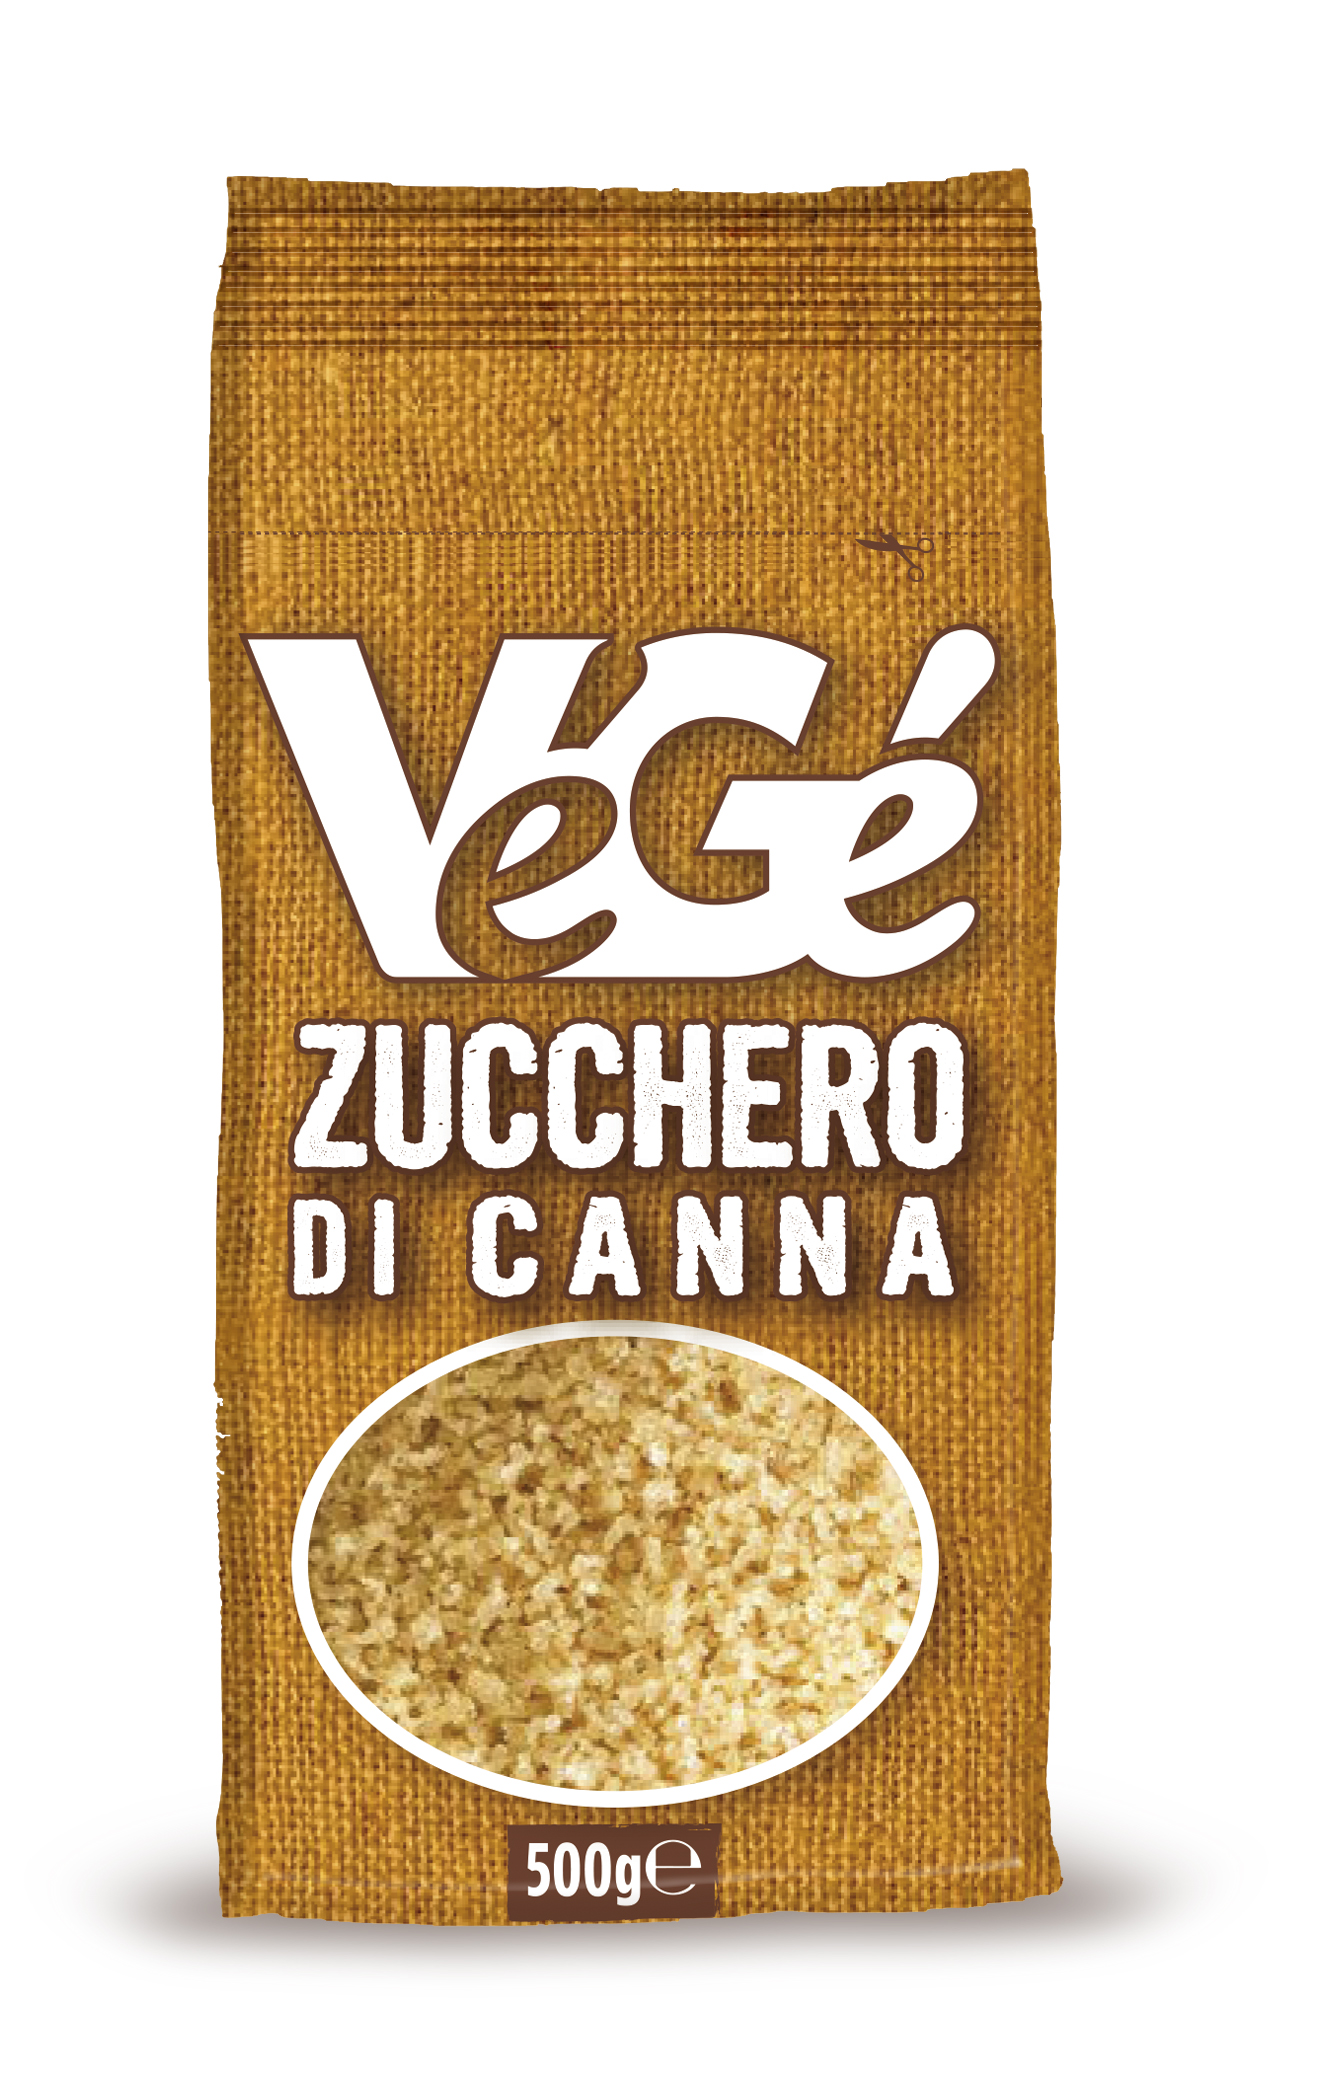 Zucchero di canna Vegé GDO (Grande Distribuzione Organizzata)